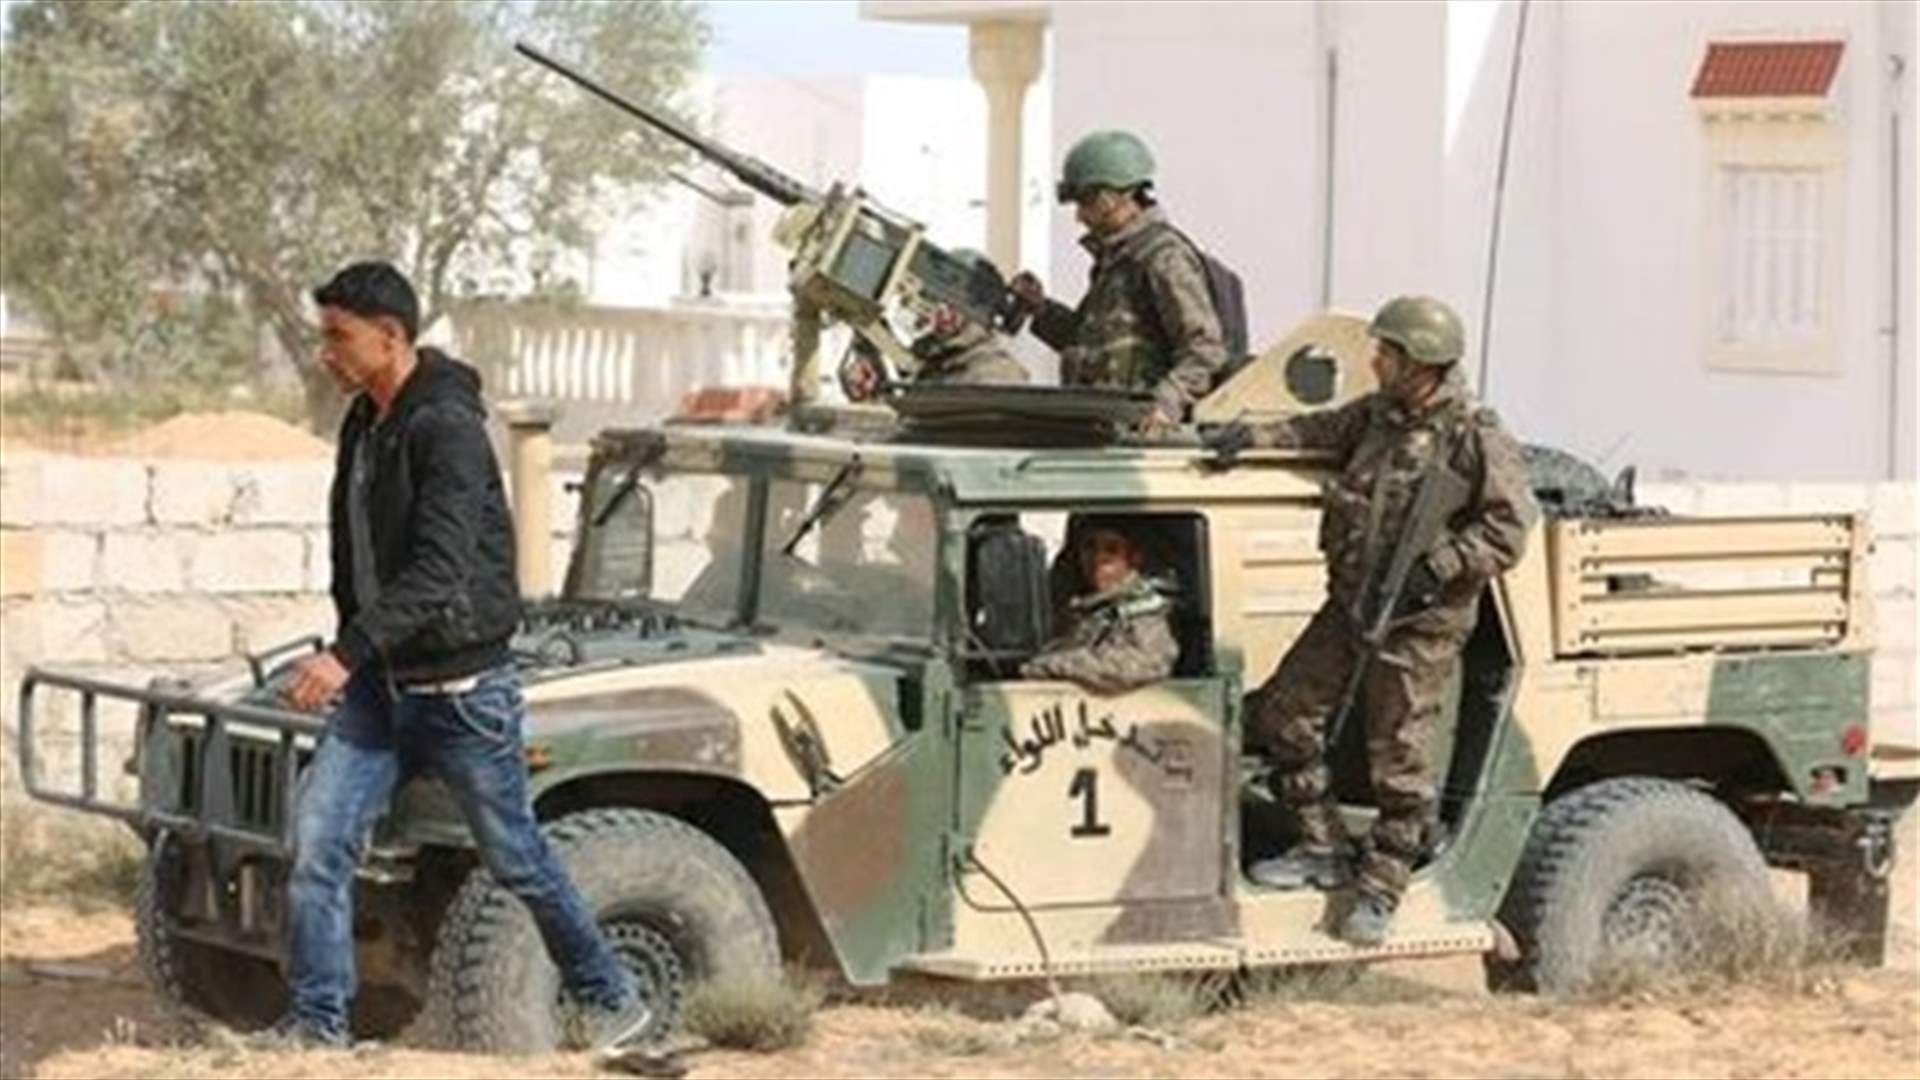 Militants kill 3 Tunisian soldiers in patrol attack